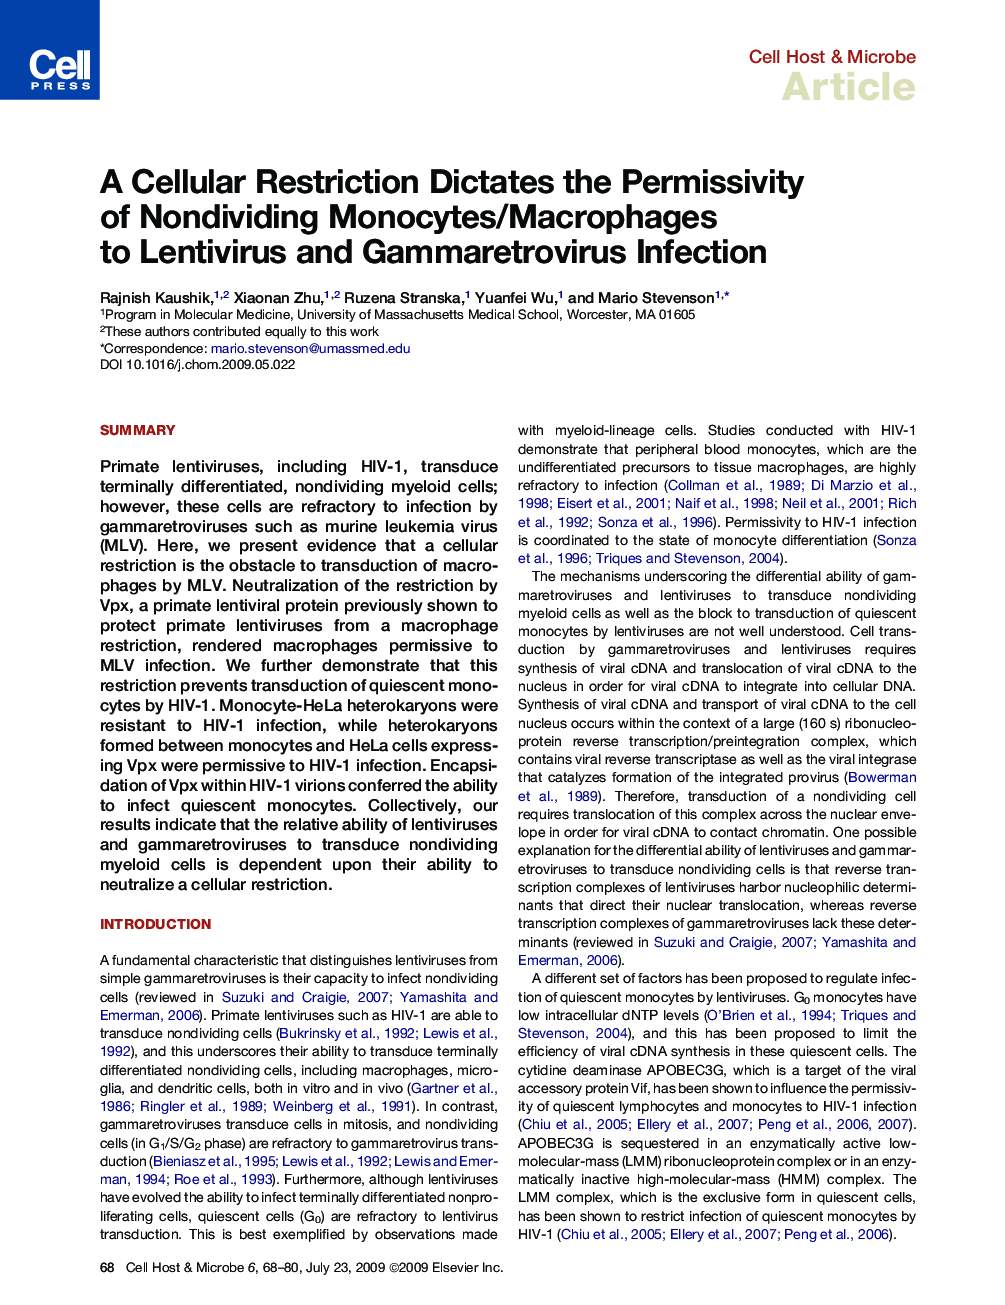 A Cellular Restriction Dictates the Permissivity of Nondividing Monocytes/Macrophages to Lentivirus and Gammaretrovirus Infection